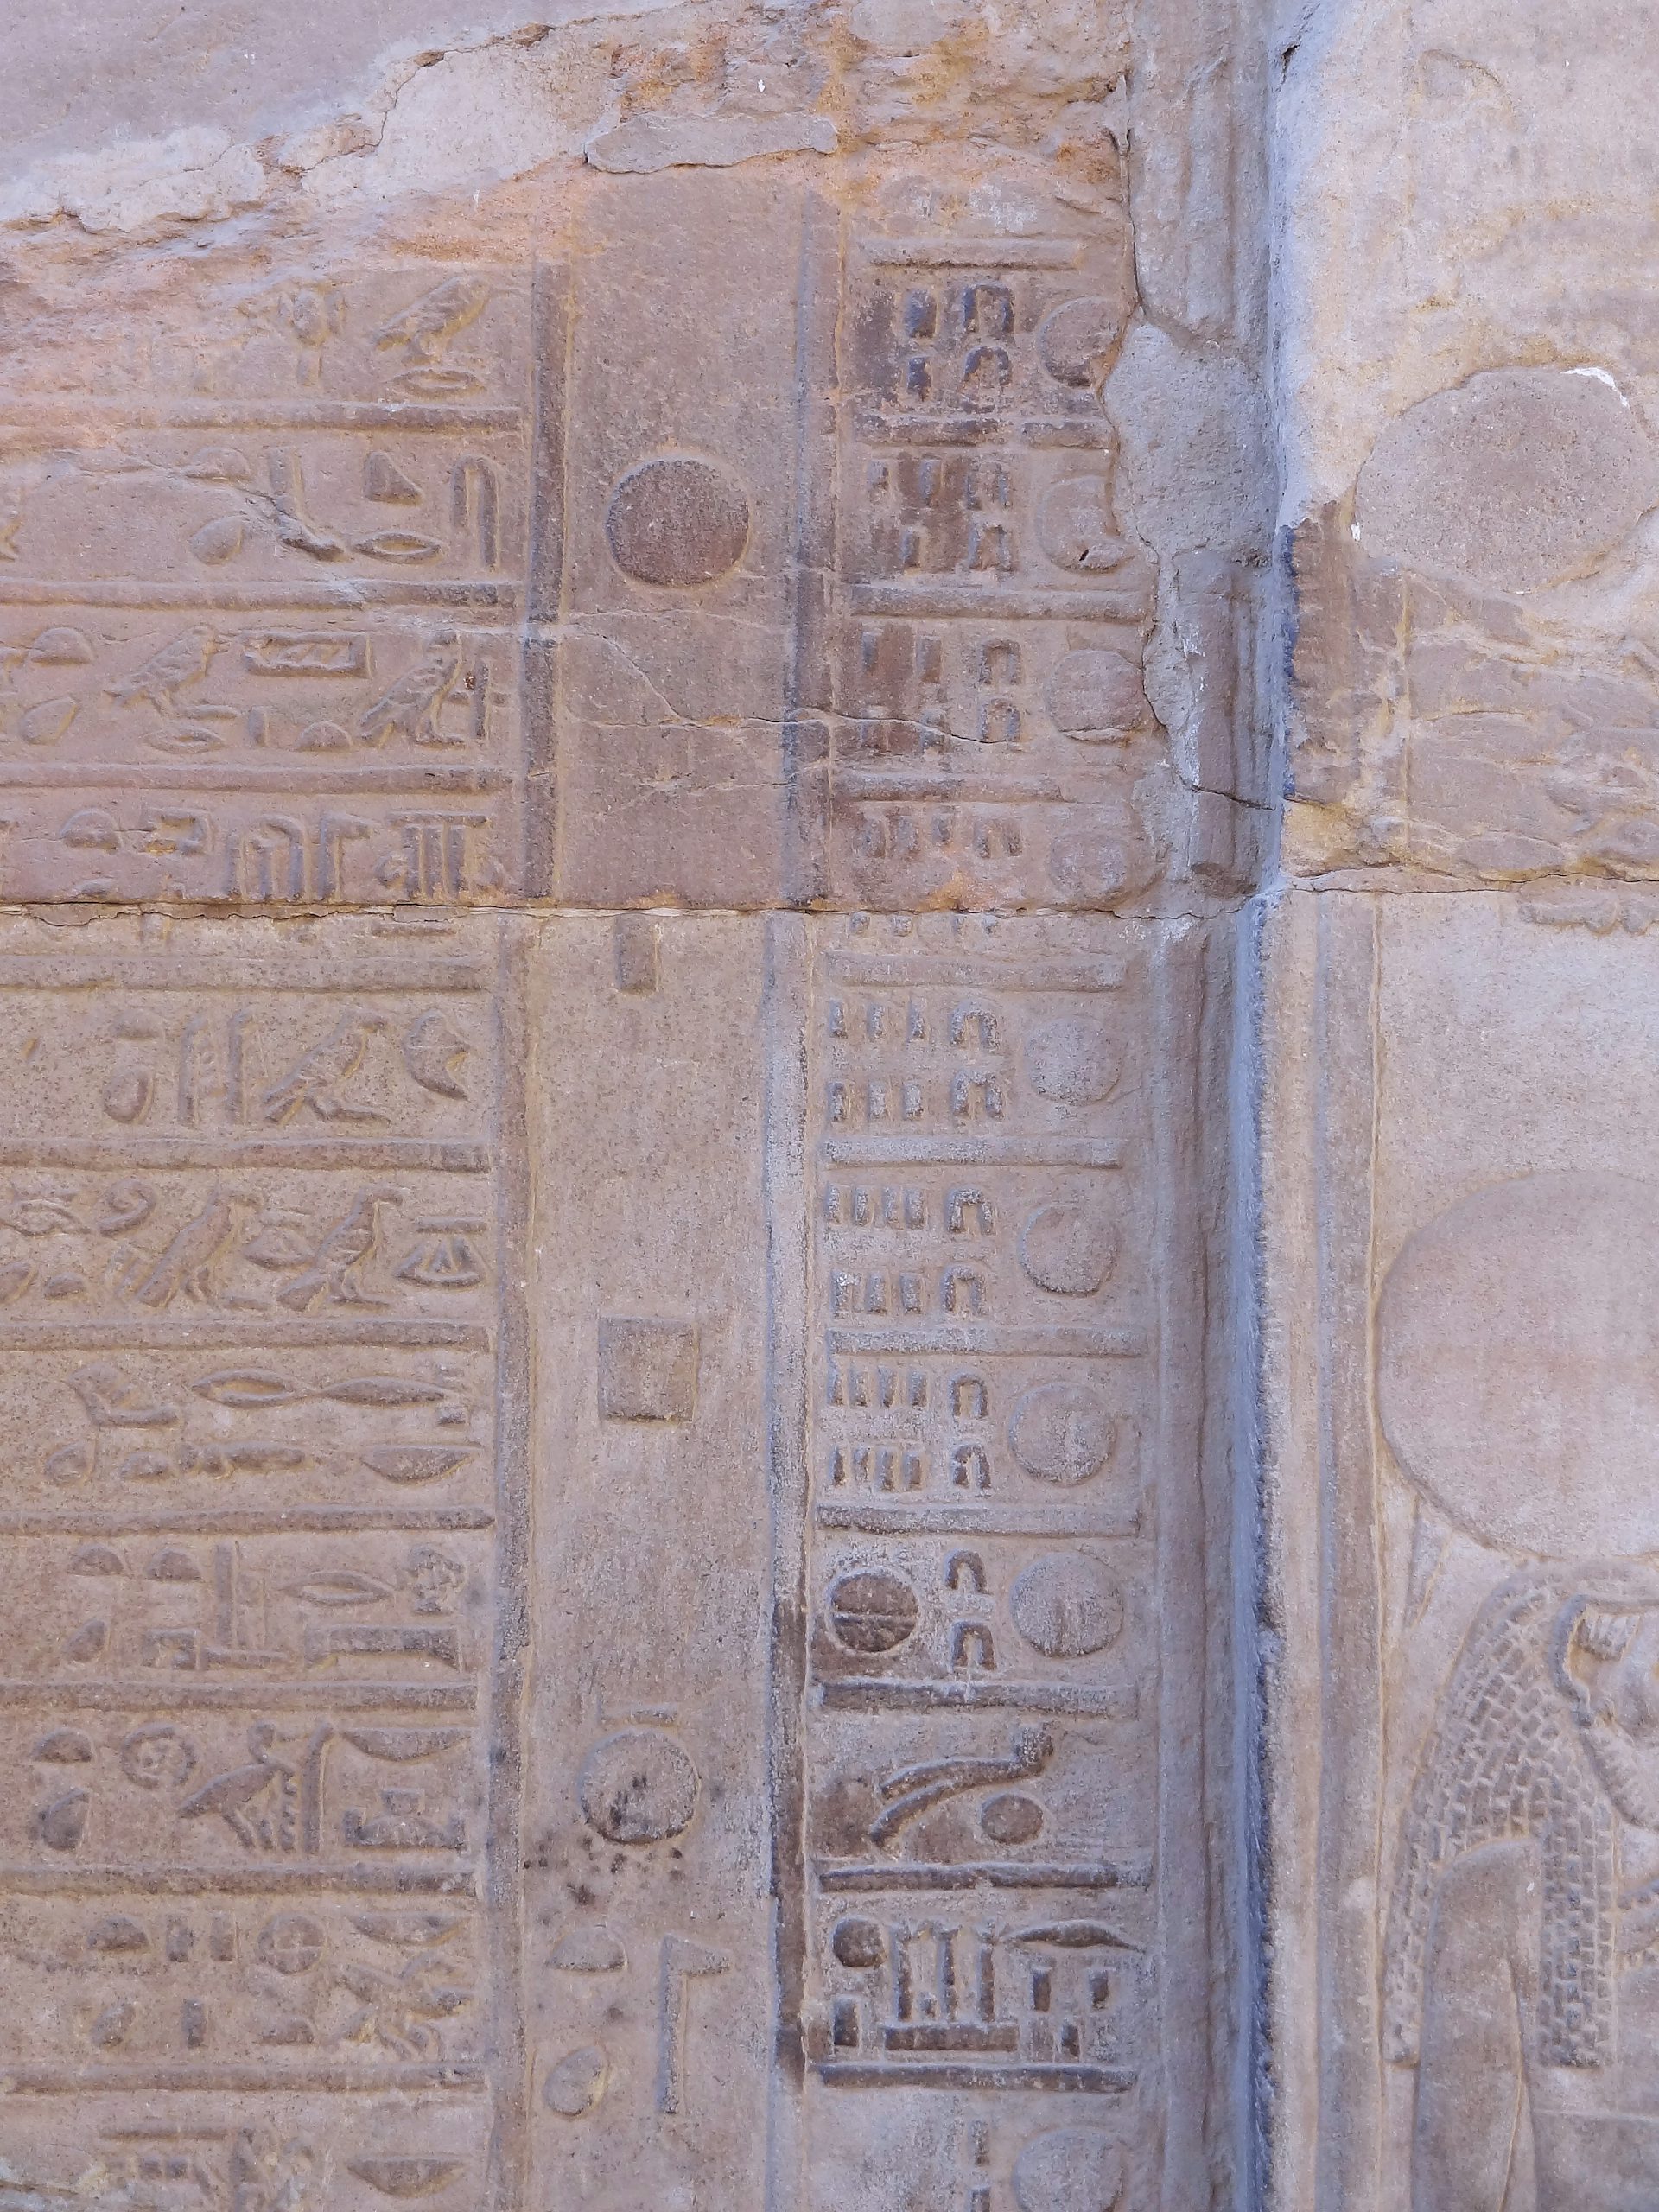 hieroglyphic calendar at Kom Ombo temple